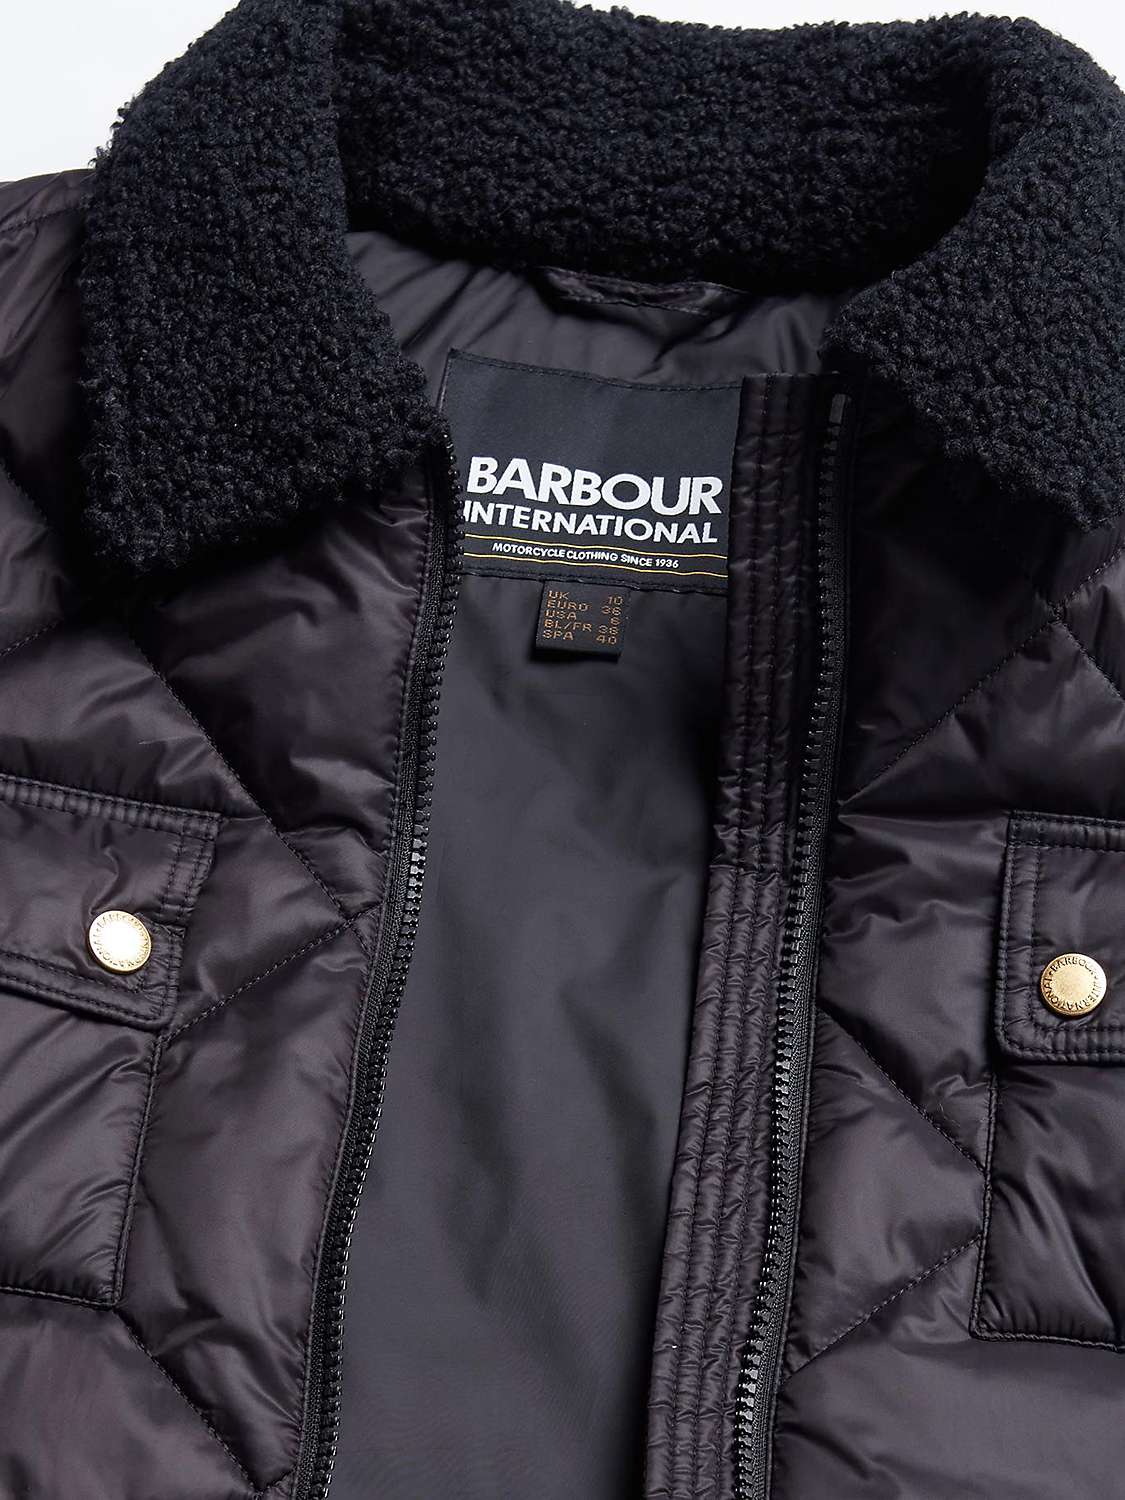 Buy Barbour International Supanova Quilted Longline Jacket Online at johnlewis.com